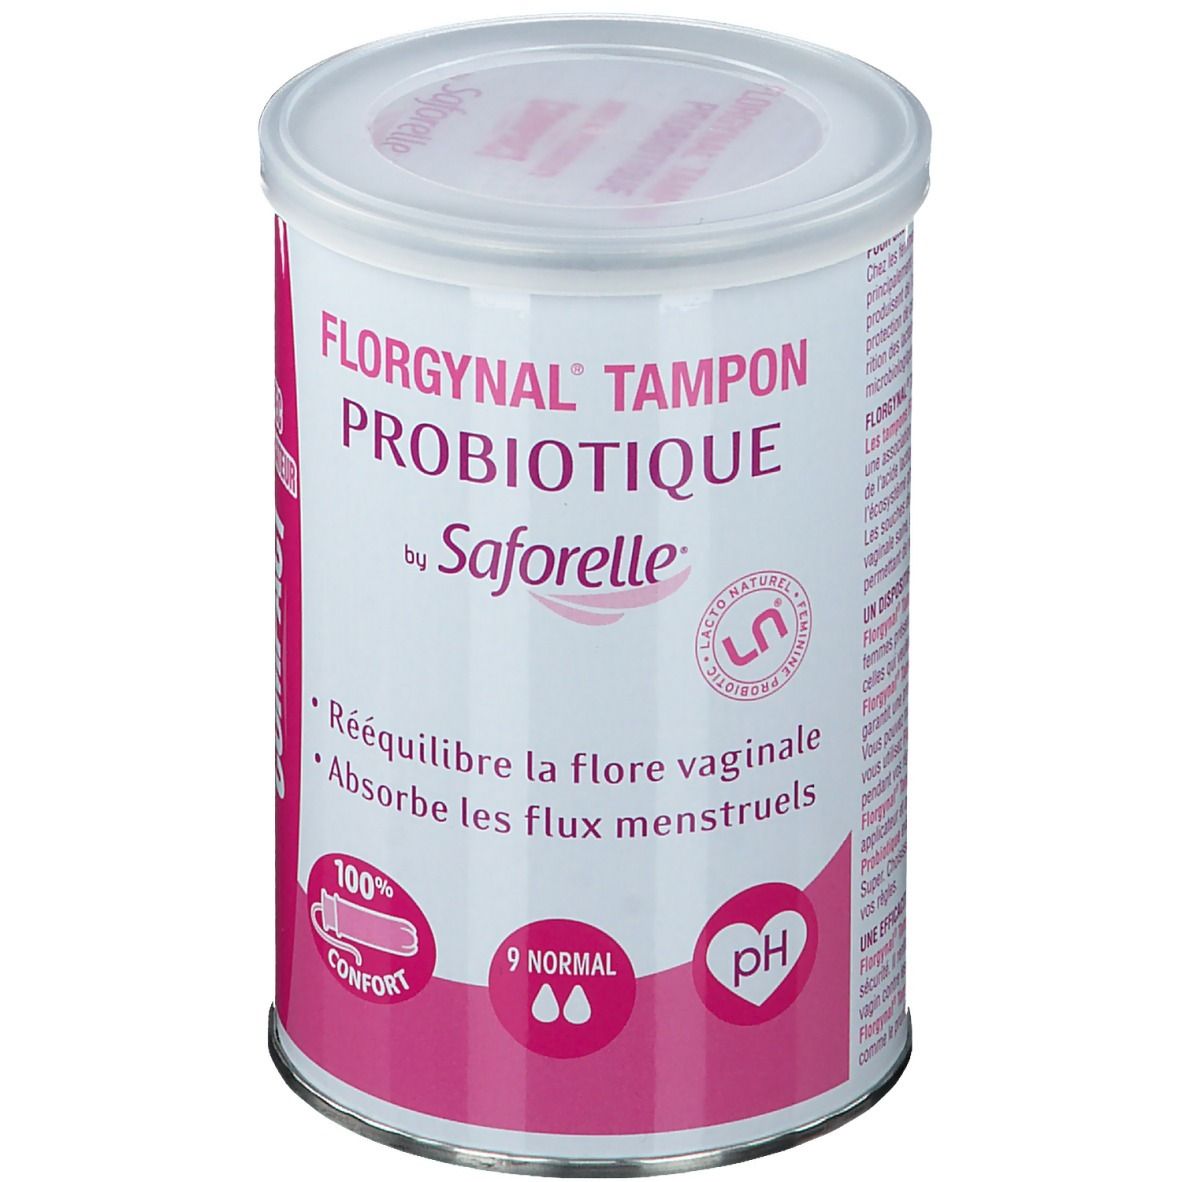 Saforelle® Florgynal Tampon Probiotique 9 Normal Compact pc(s) tampon(s)